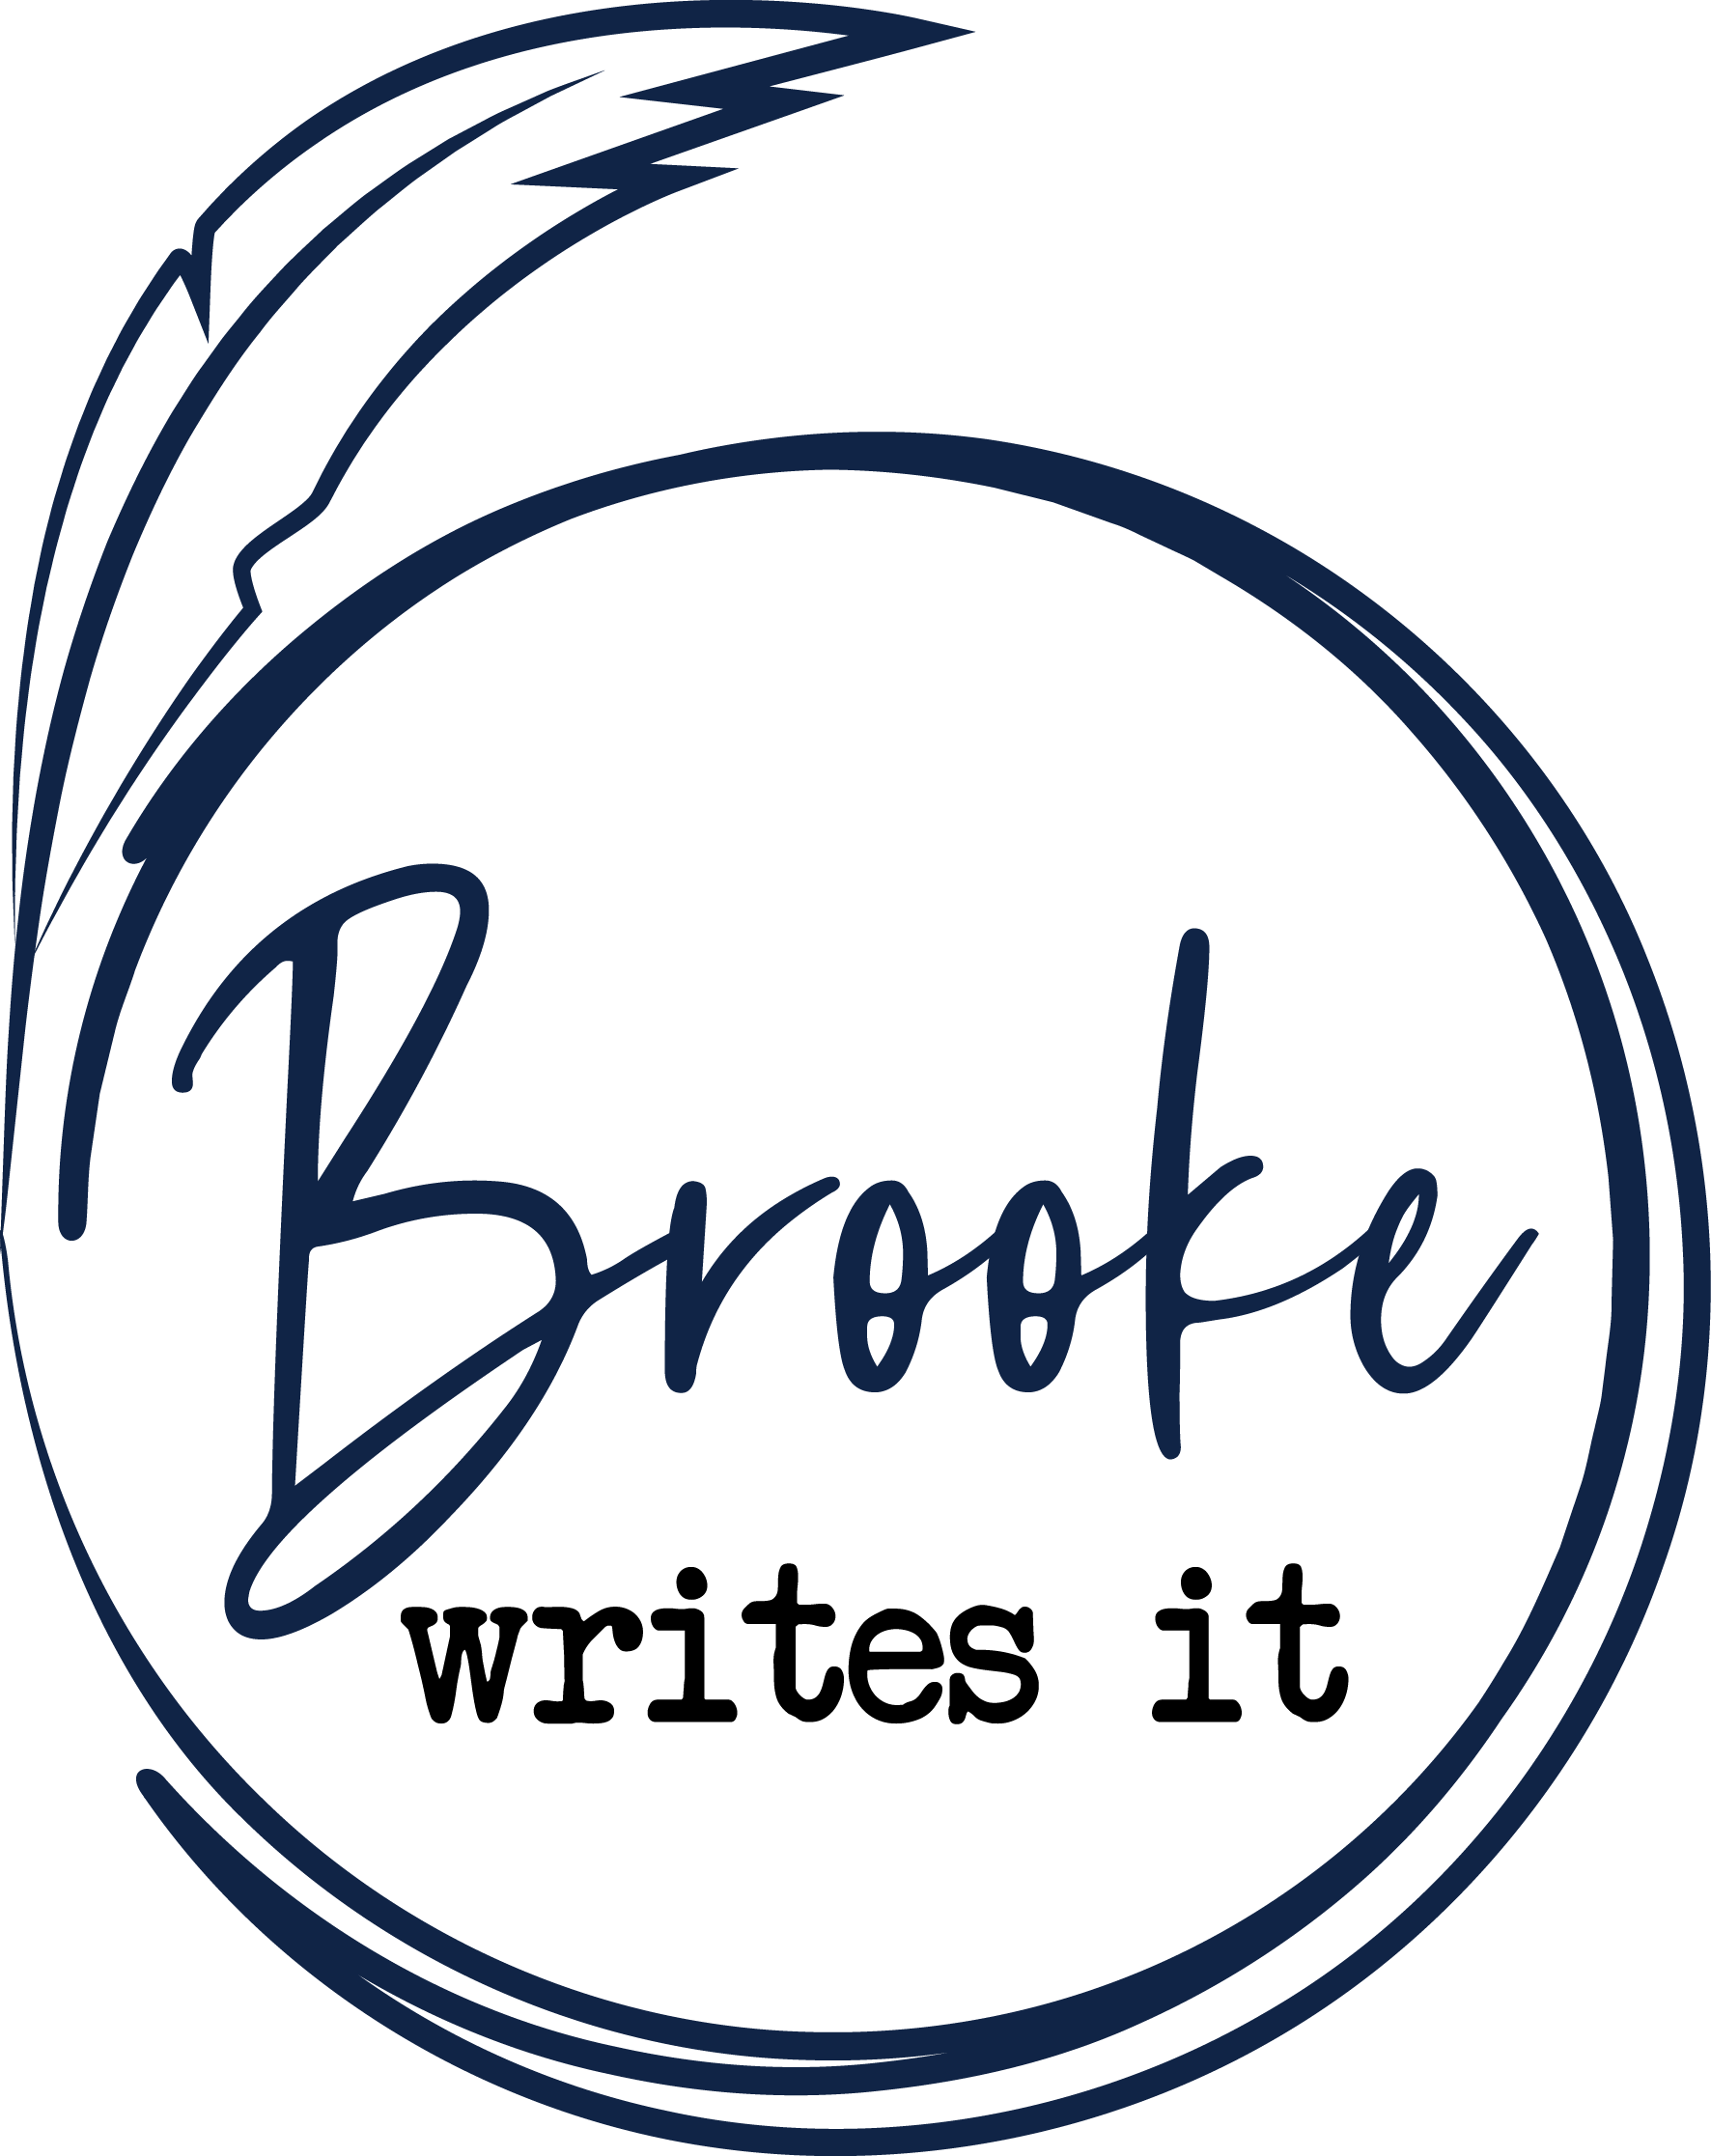 Brooke Writes It